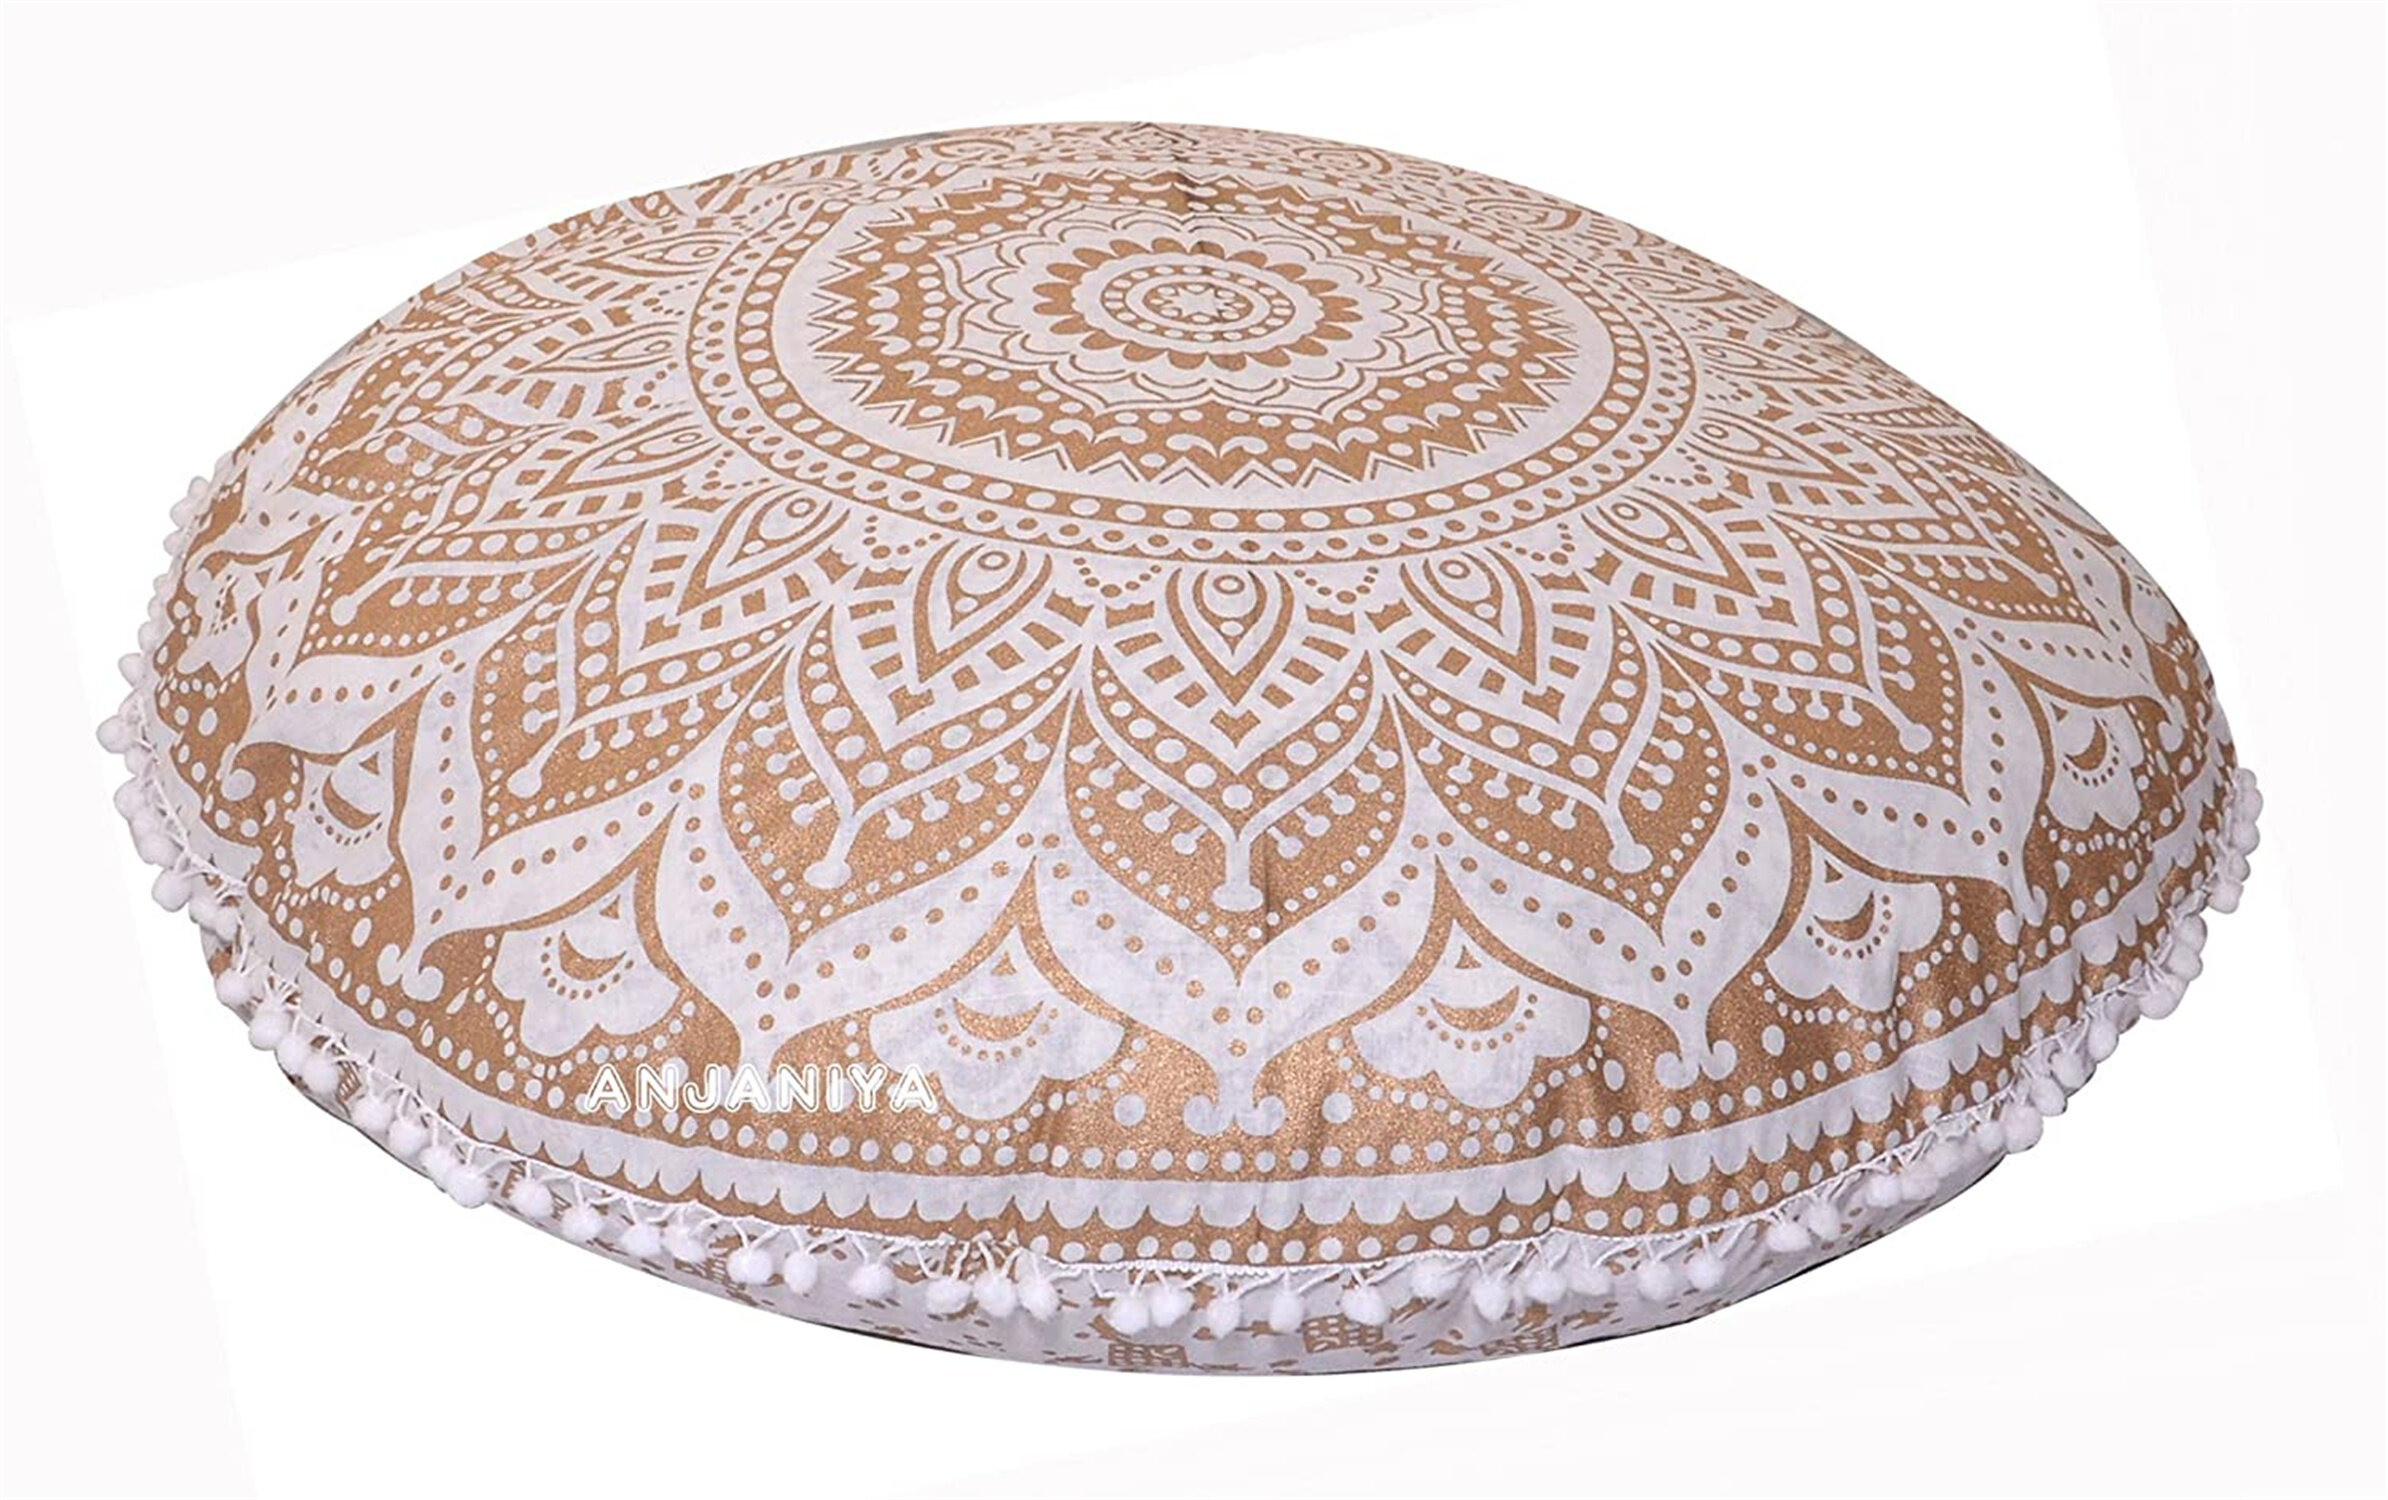 32" Indian Round Multi Star Mandala Pillow Meditation Cushion Pouf Ottoman Cover